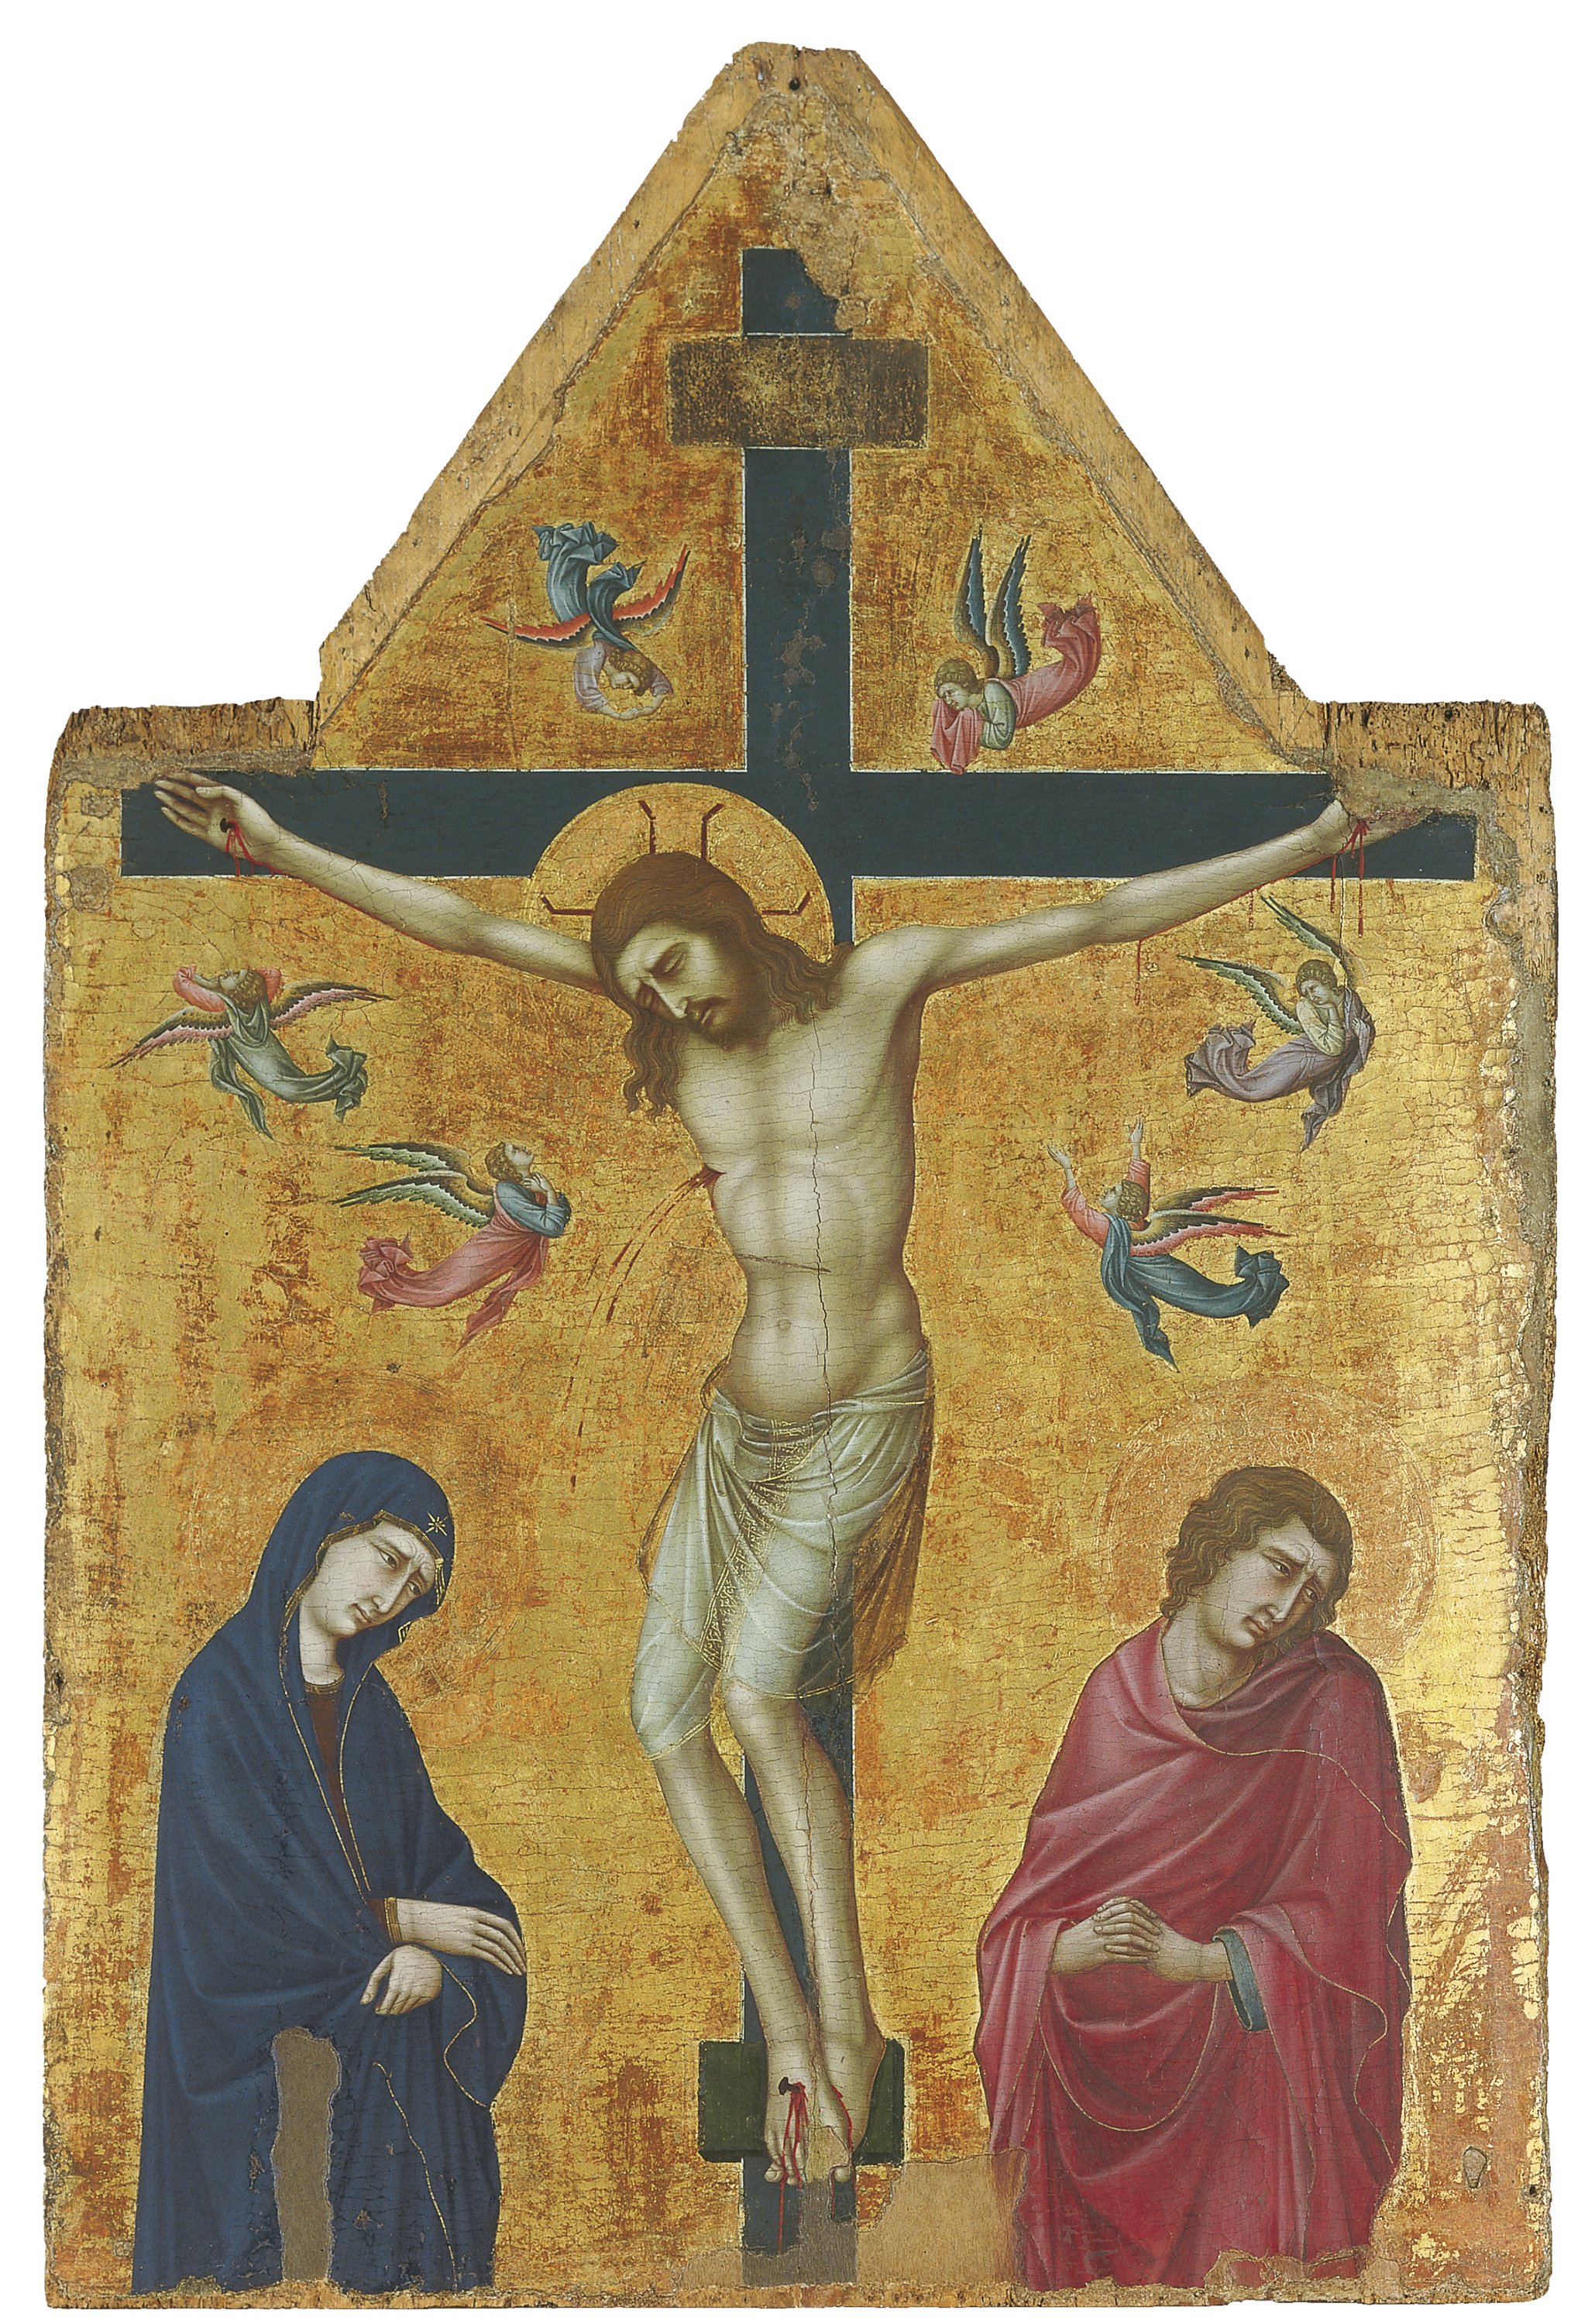 The Crucifixion with the Virgin, Saint John and Angels. La Crucifixión con la Virgen, san Juan y ángeles, c. 1330-1335